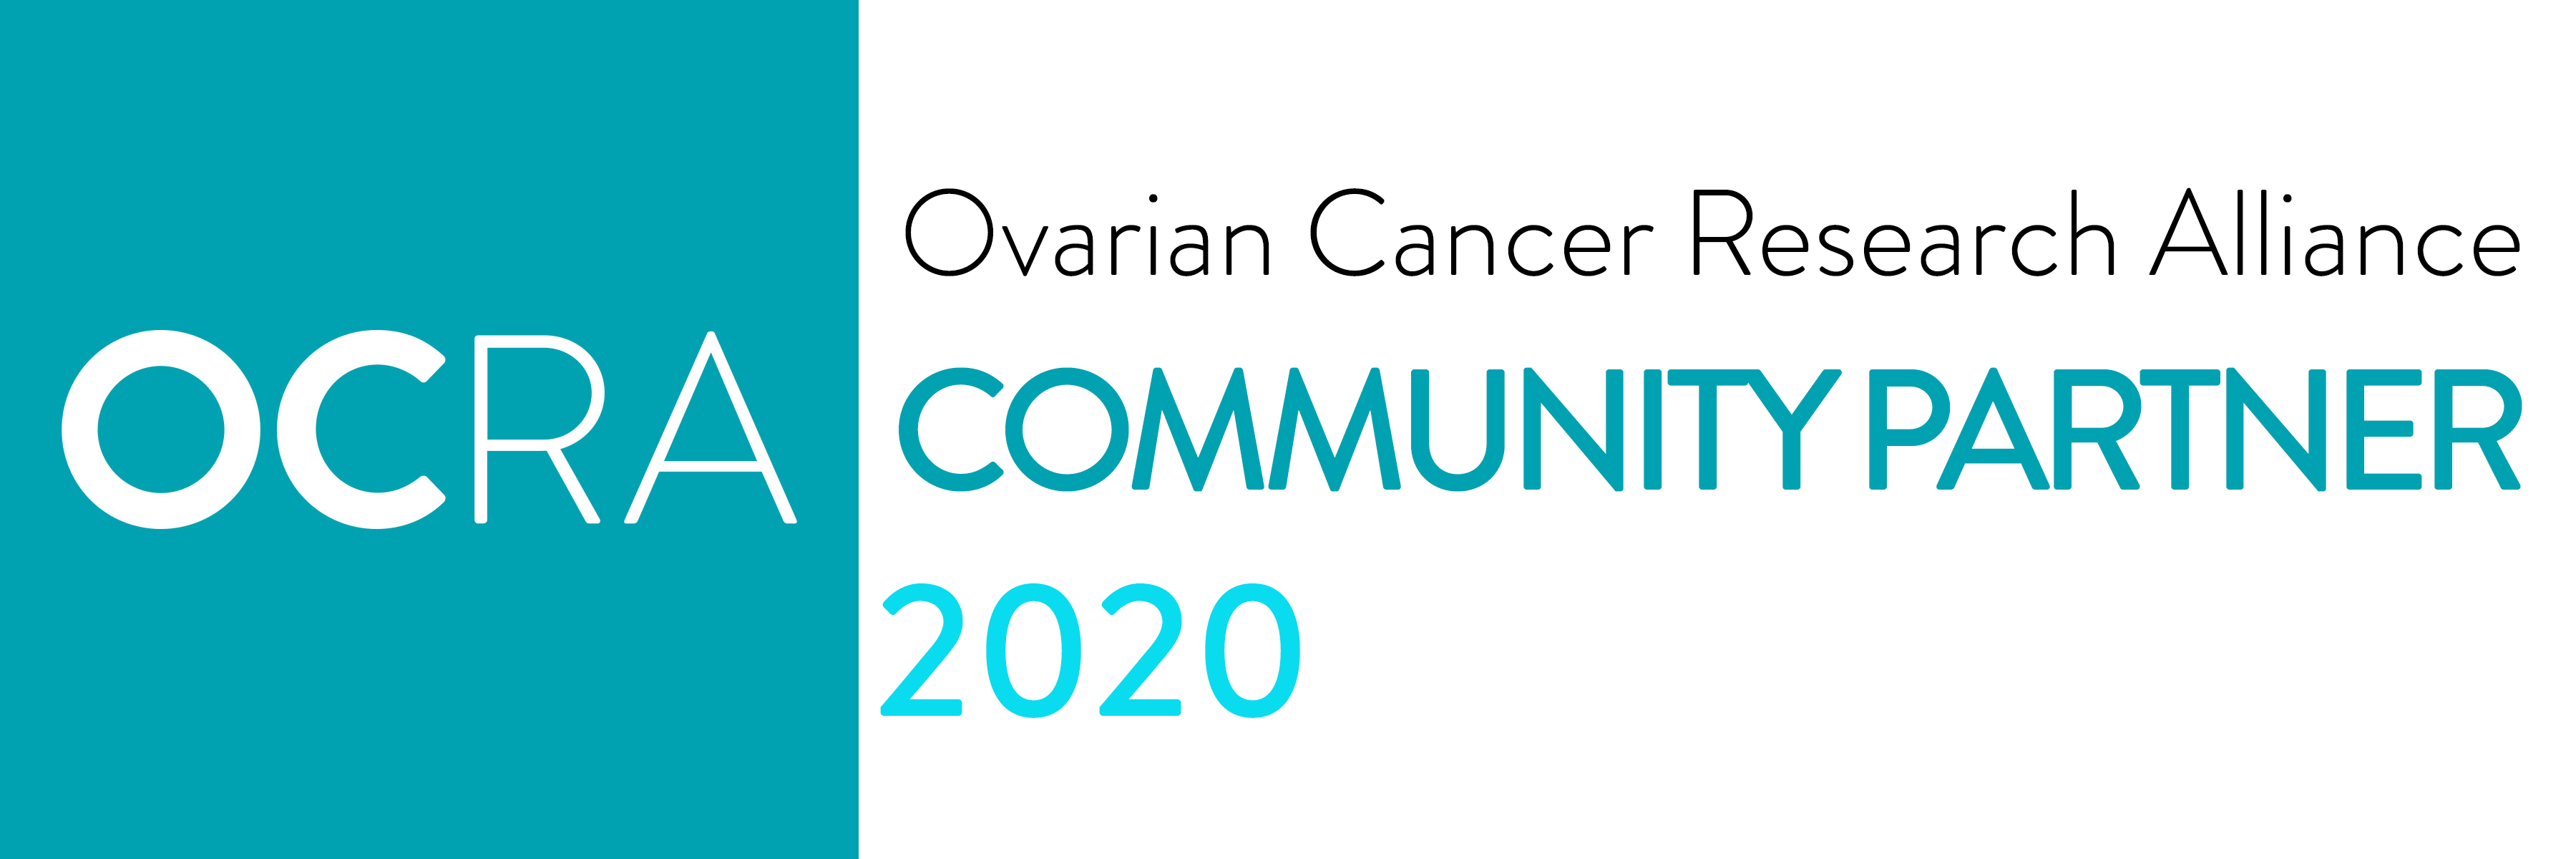 Ovarian Cancer Research Fund Alliance